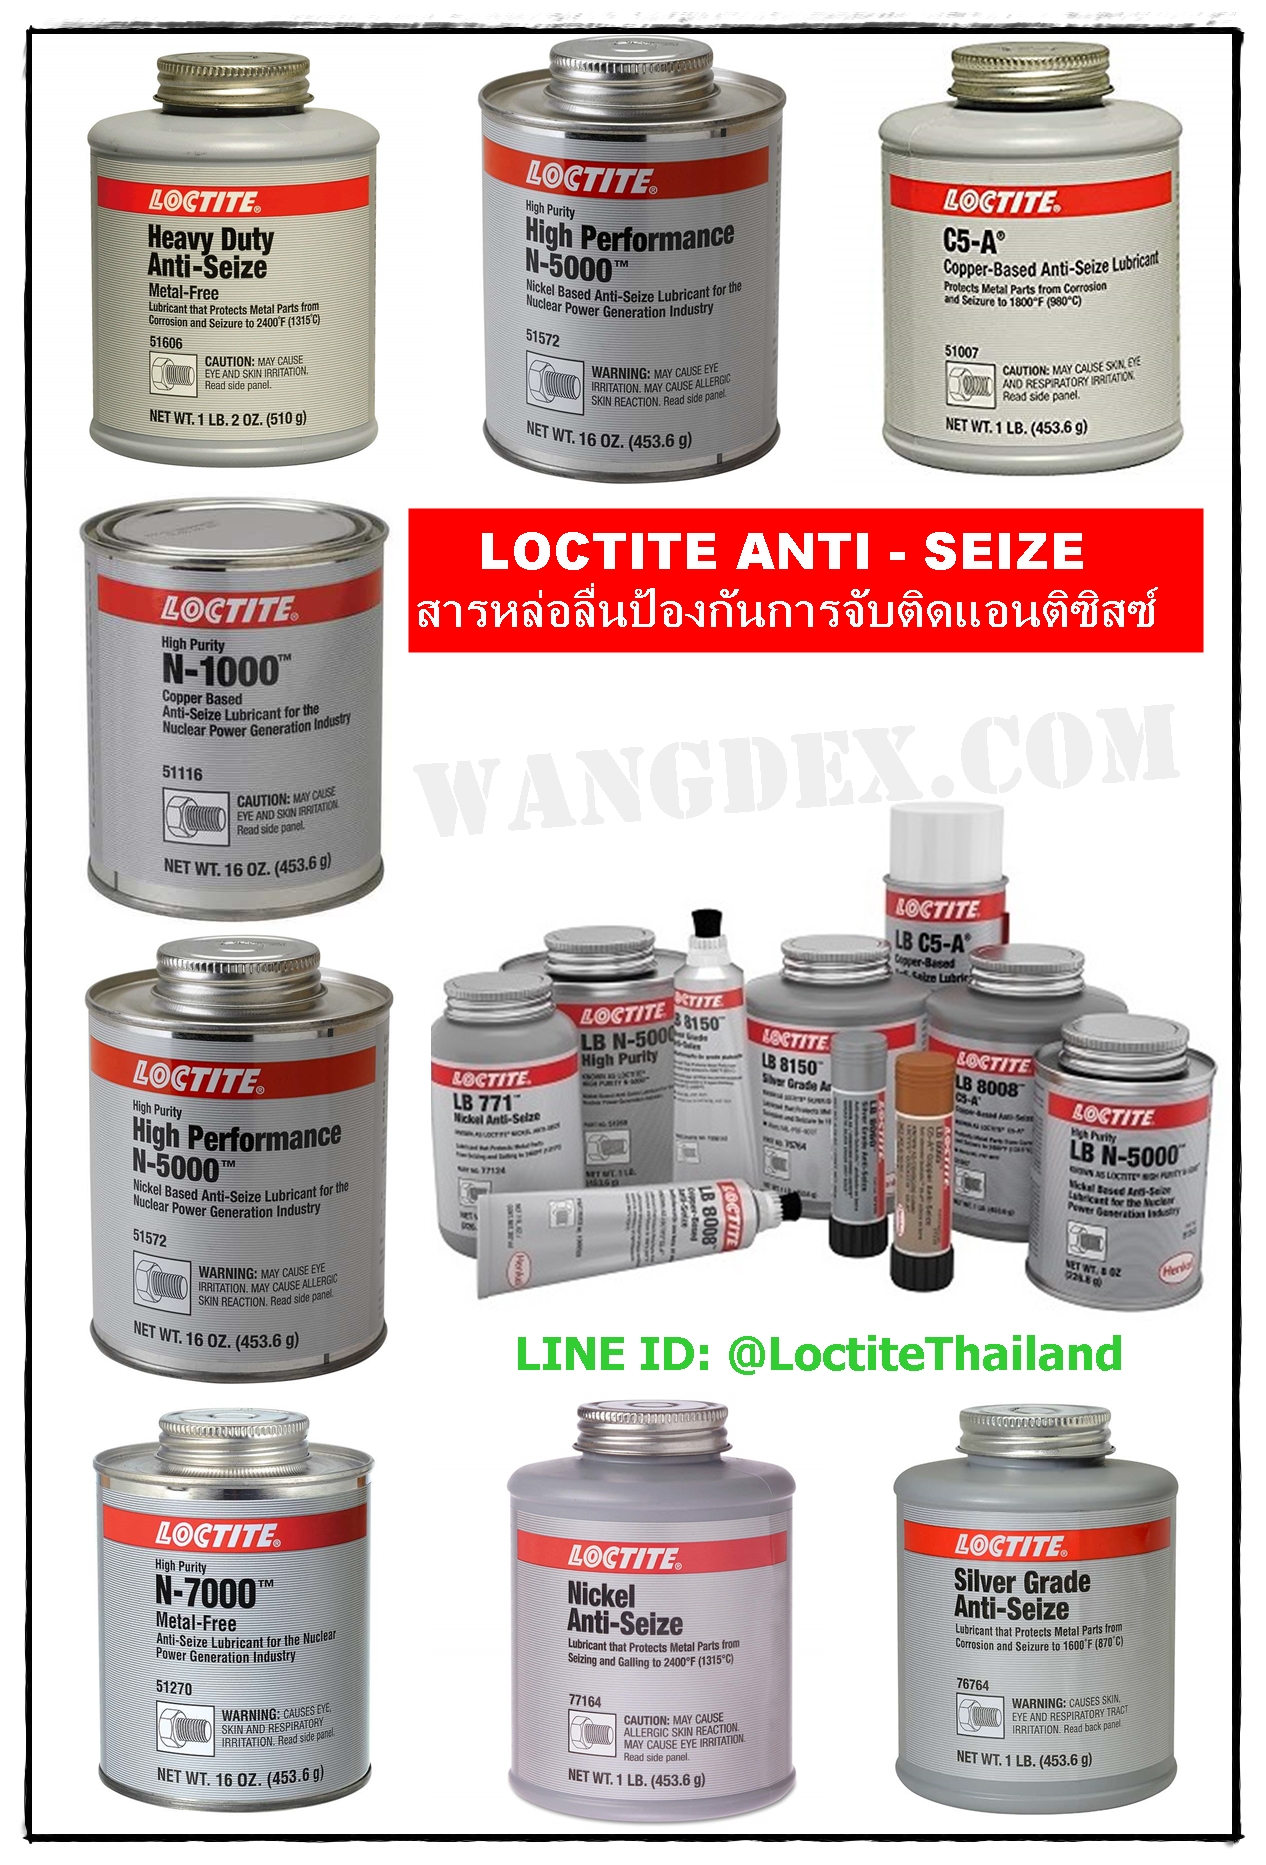 Loctite Anti-Seize Lubricants, LB8150, LB771, LB8008, LB8009